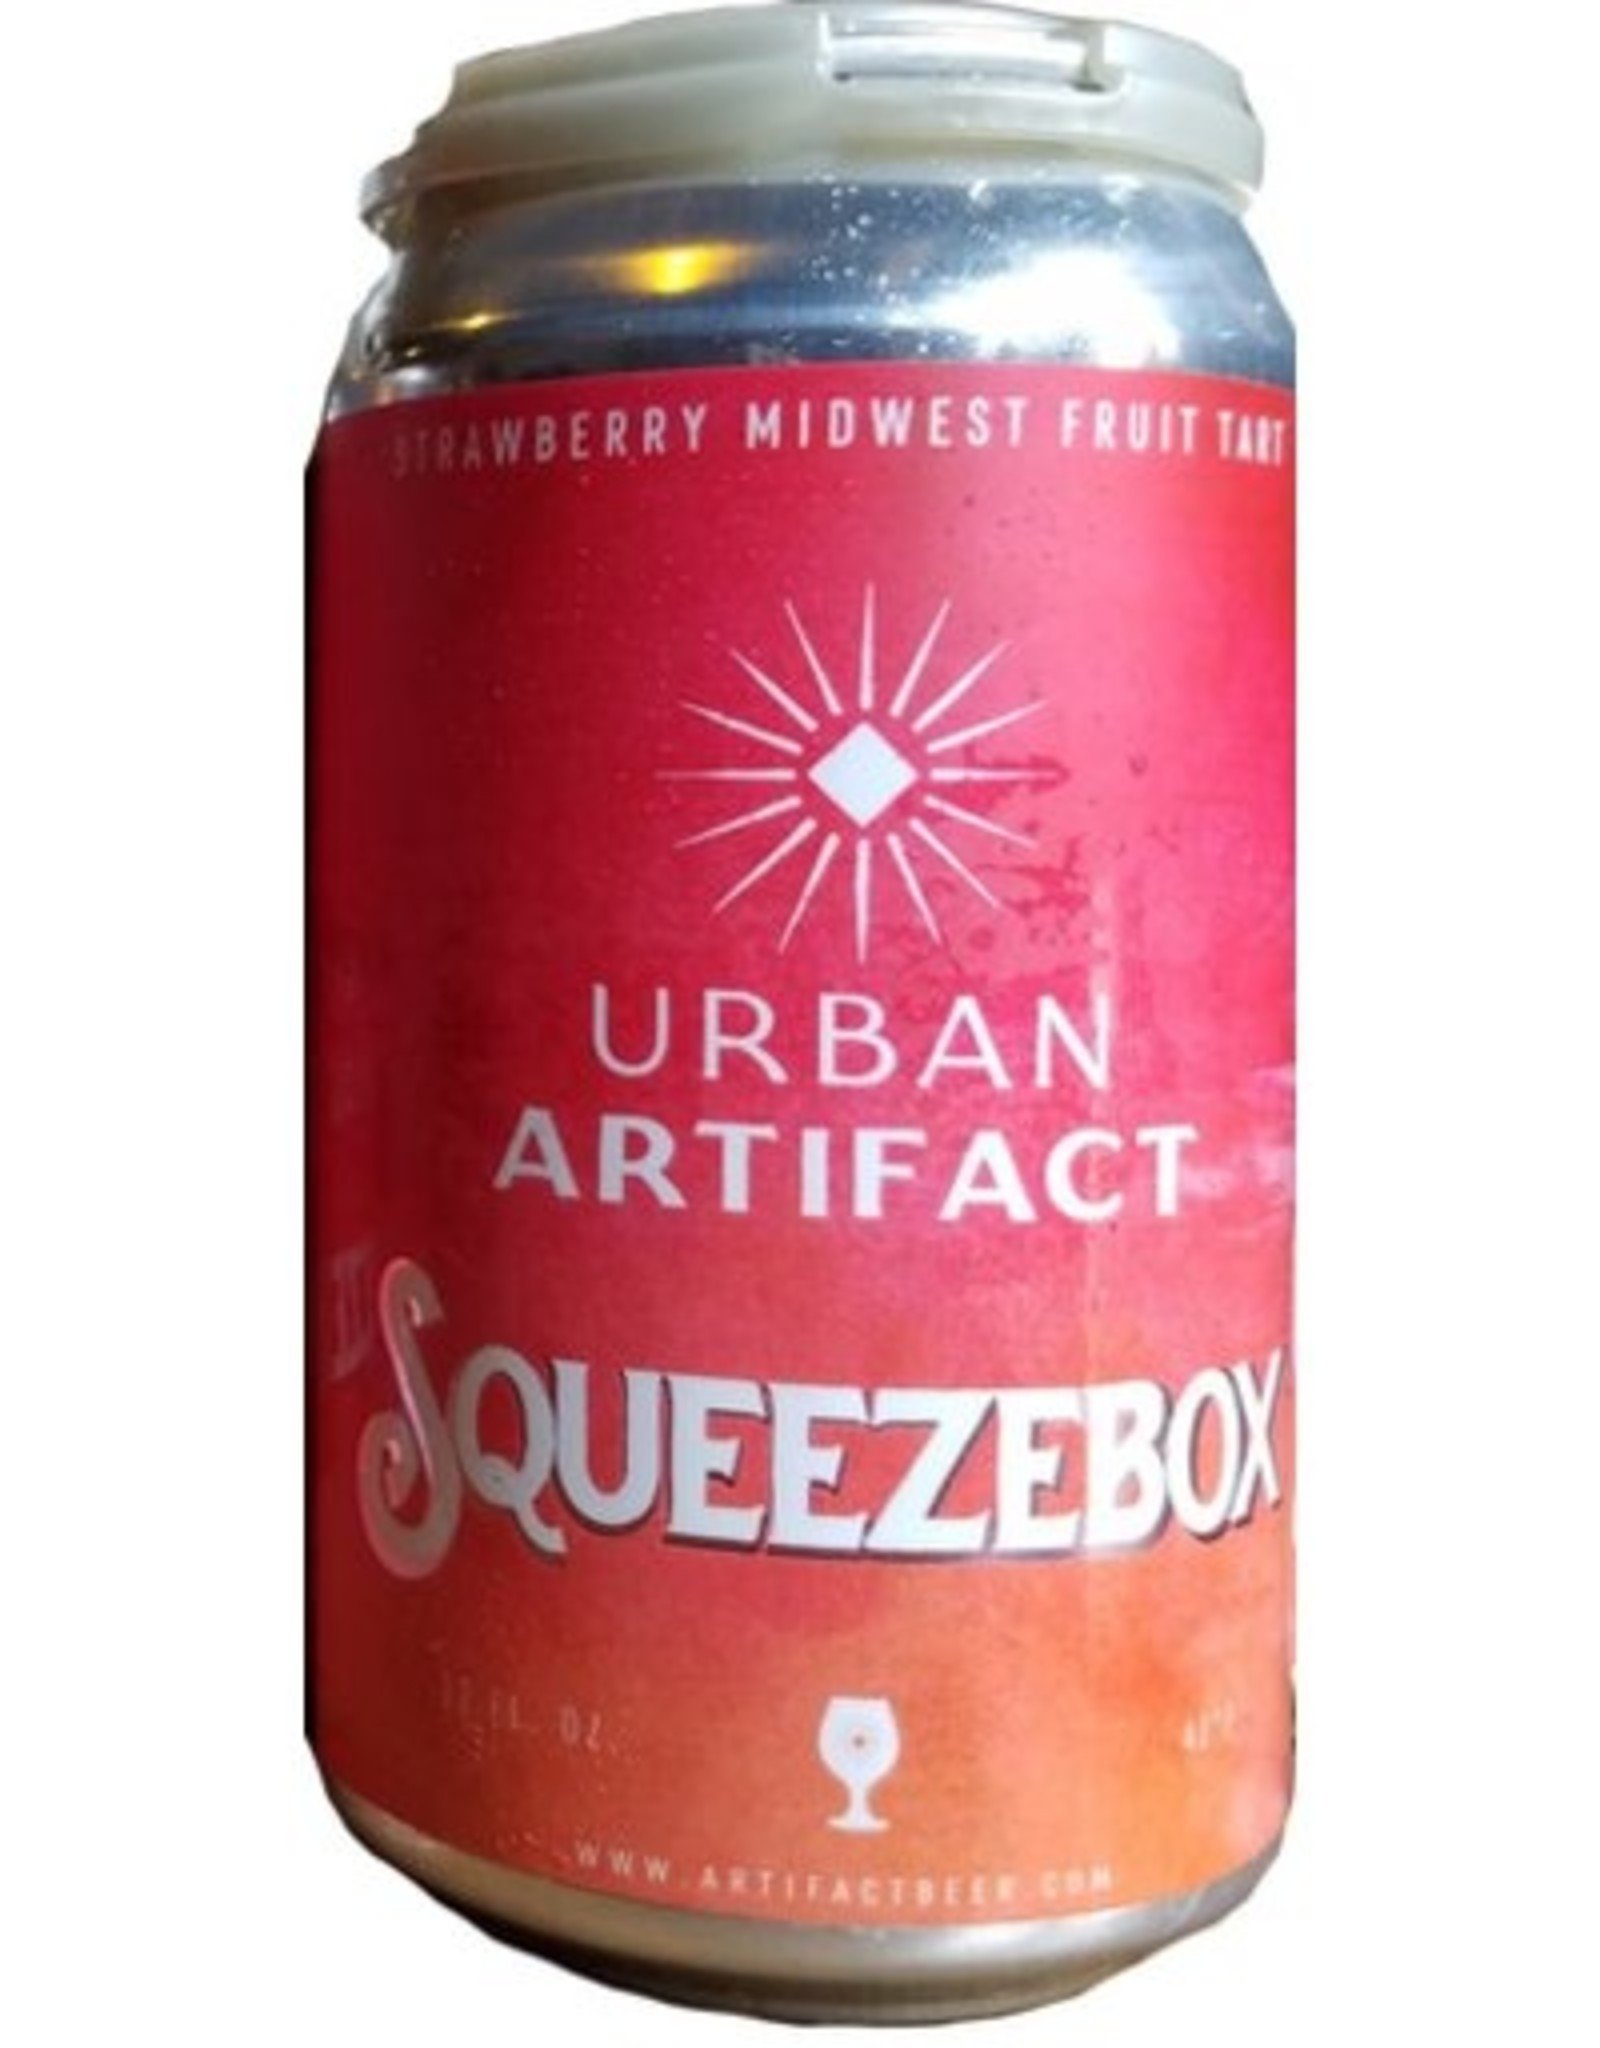 Urban Artifact Squeezebox 4x12 oz cans